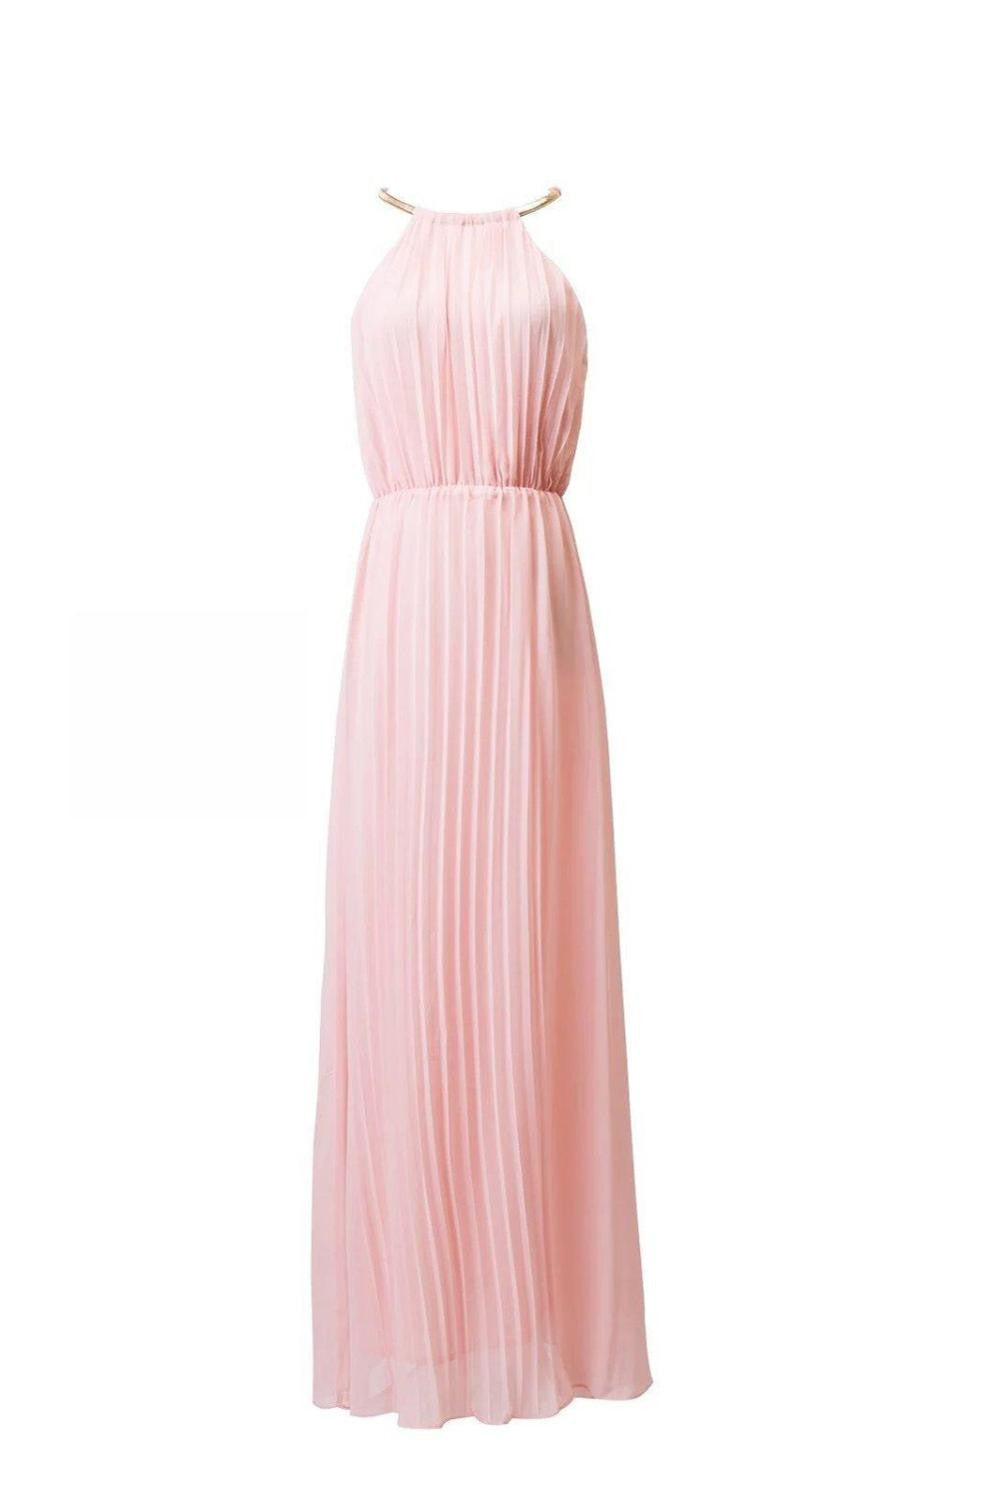 Online discount shop Australia - fashion sexy dress sleeveless Halter pleated pink series of sexy fashion chiffon dress